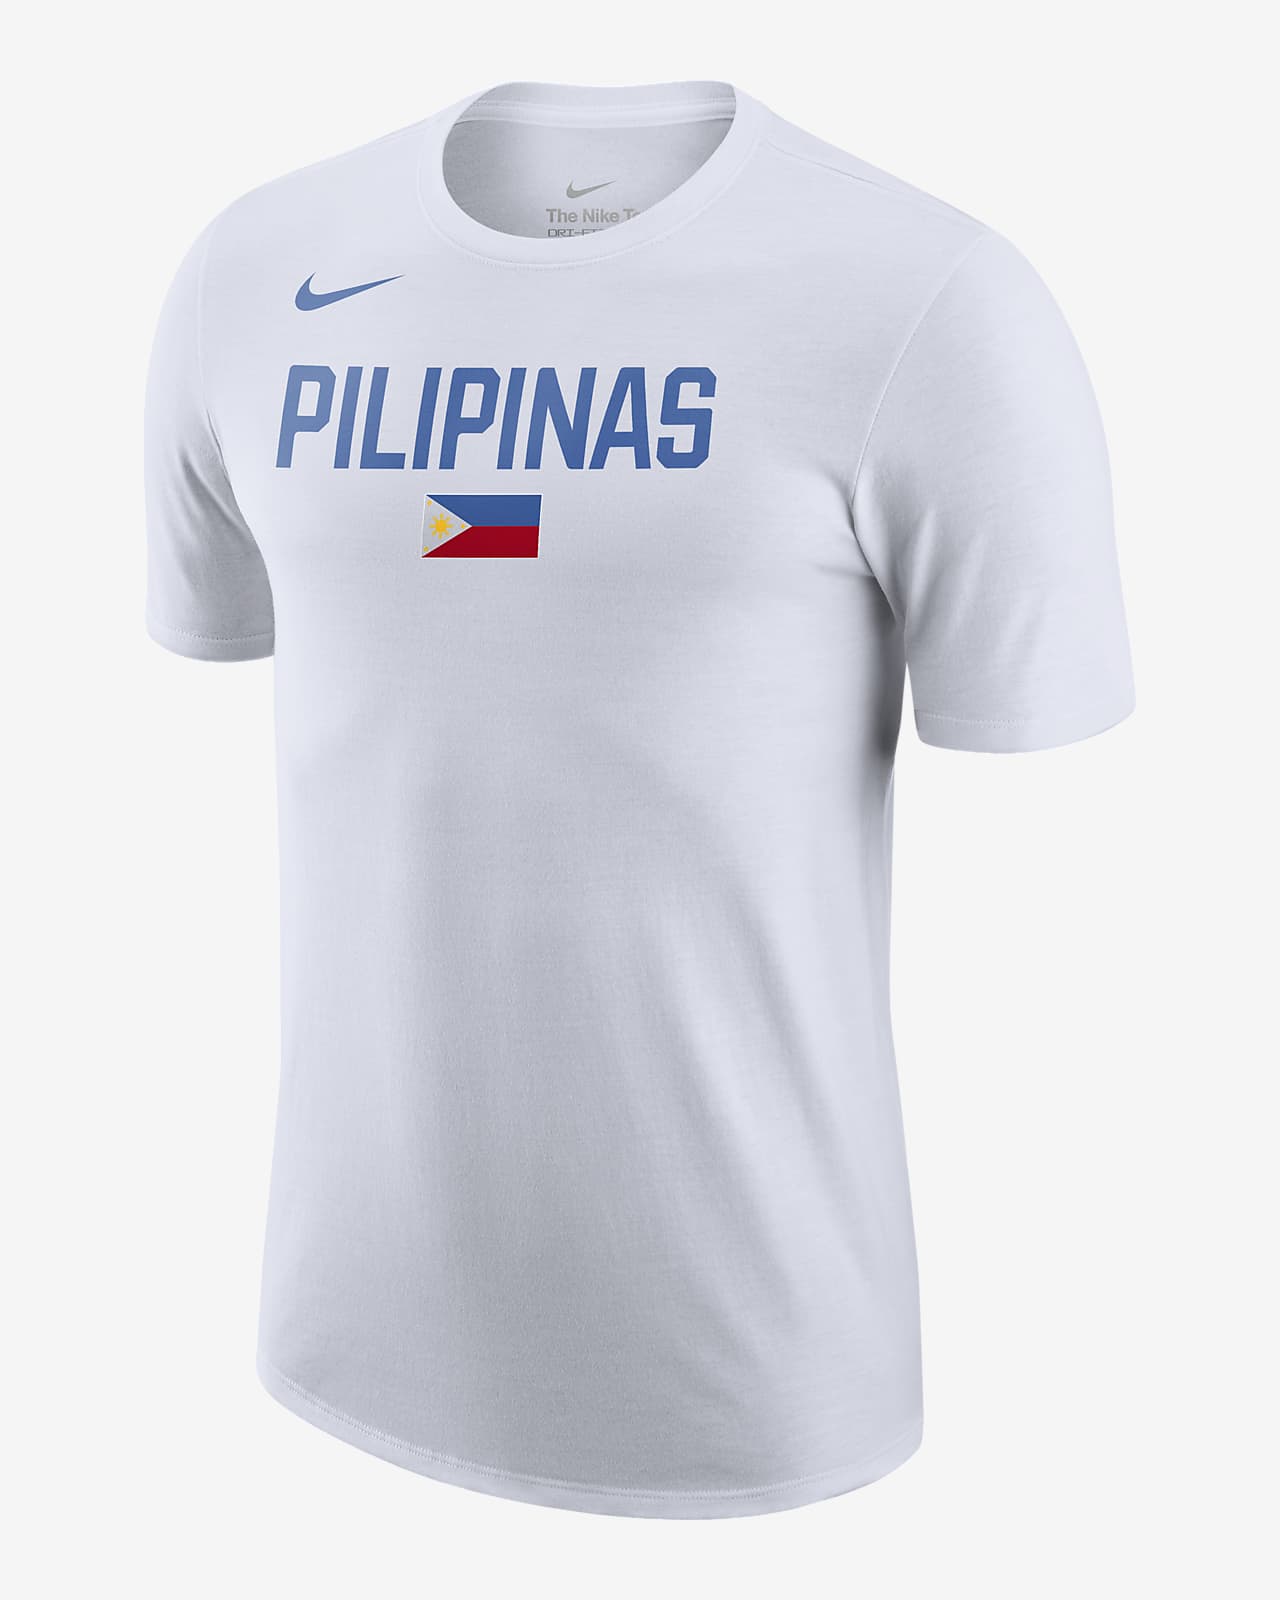 Basketball Tops & T-Shirts. Nike PH